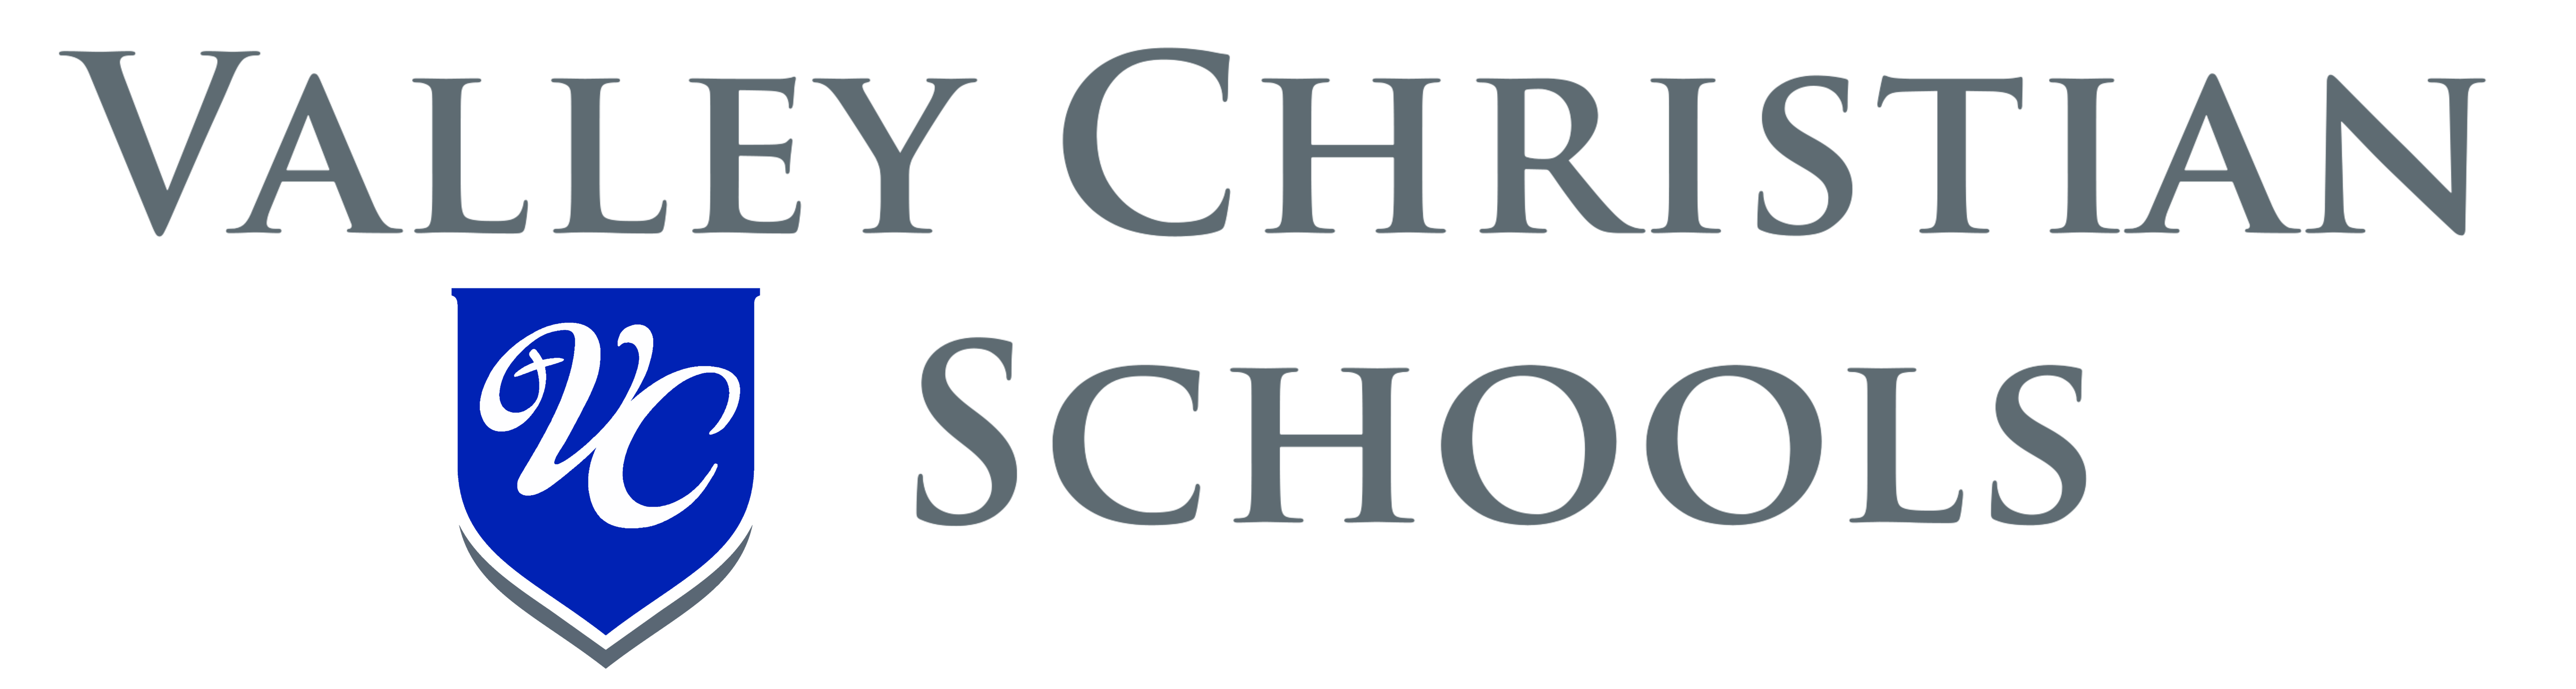 Valley Christian Schools